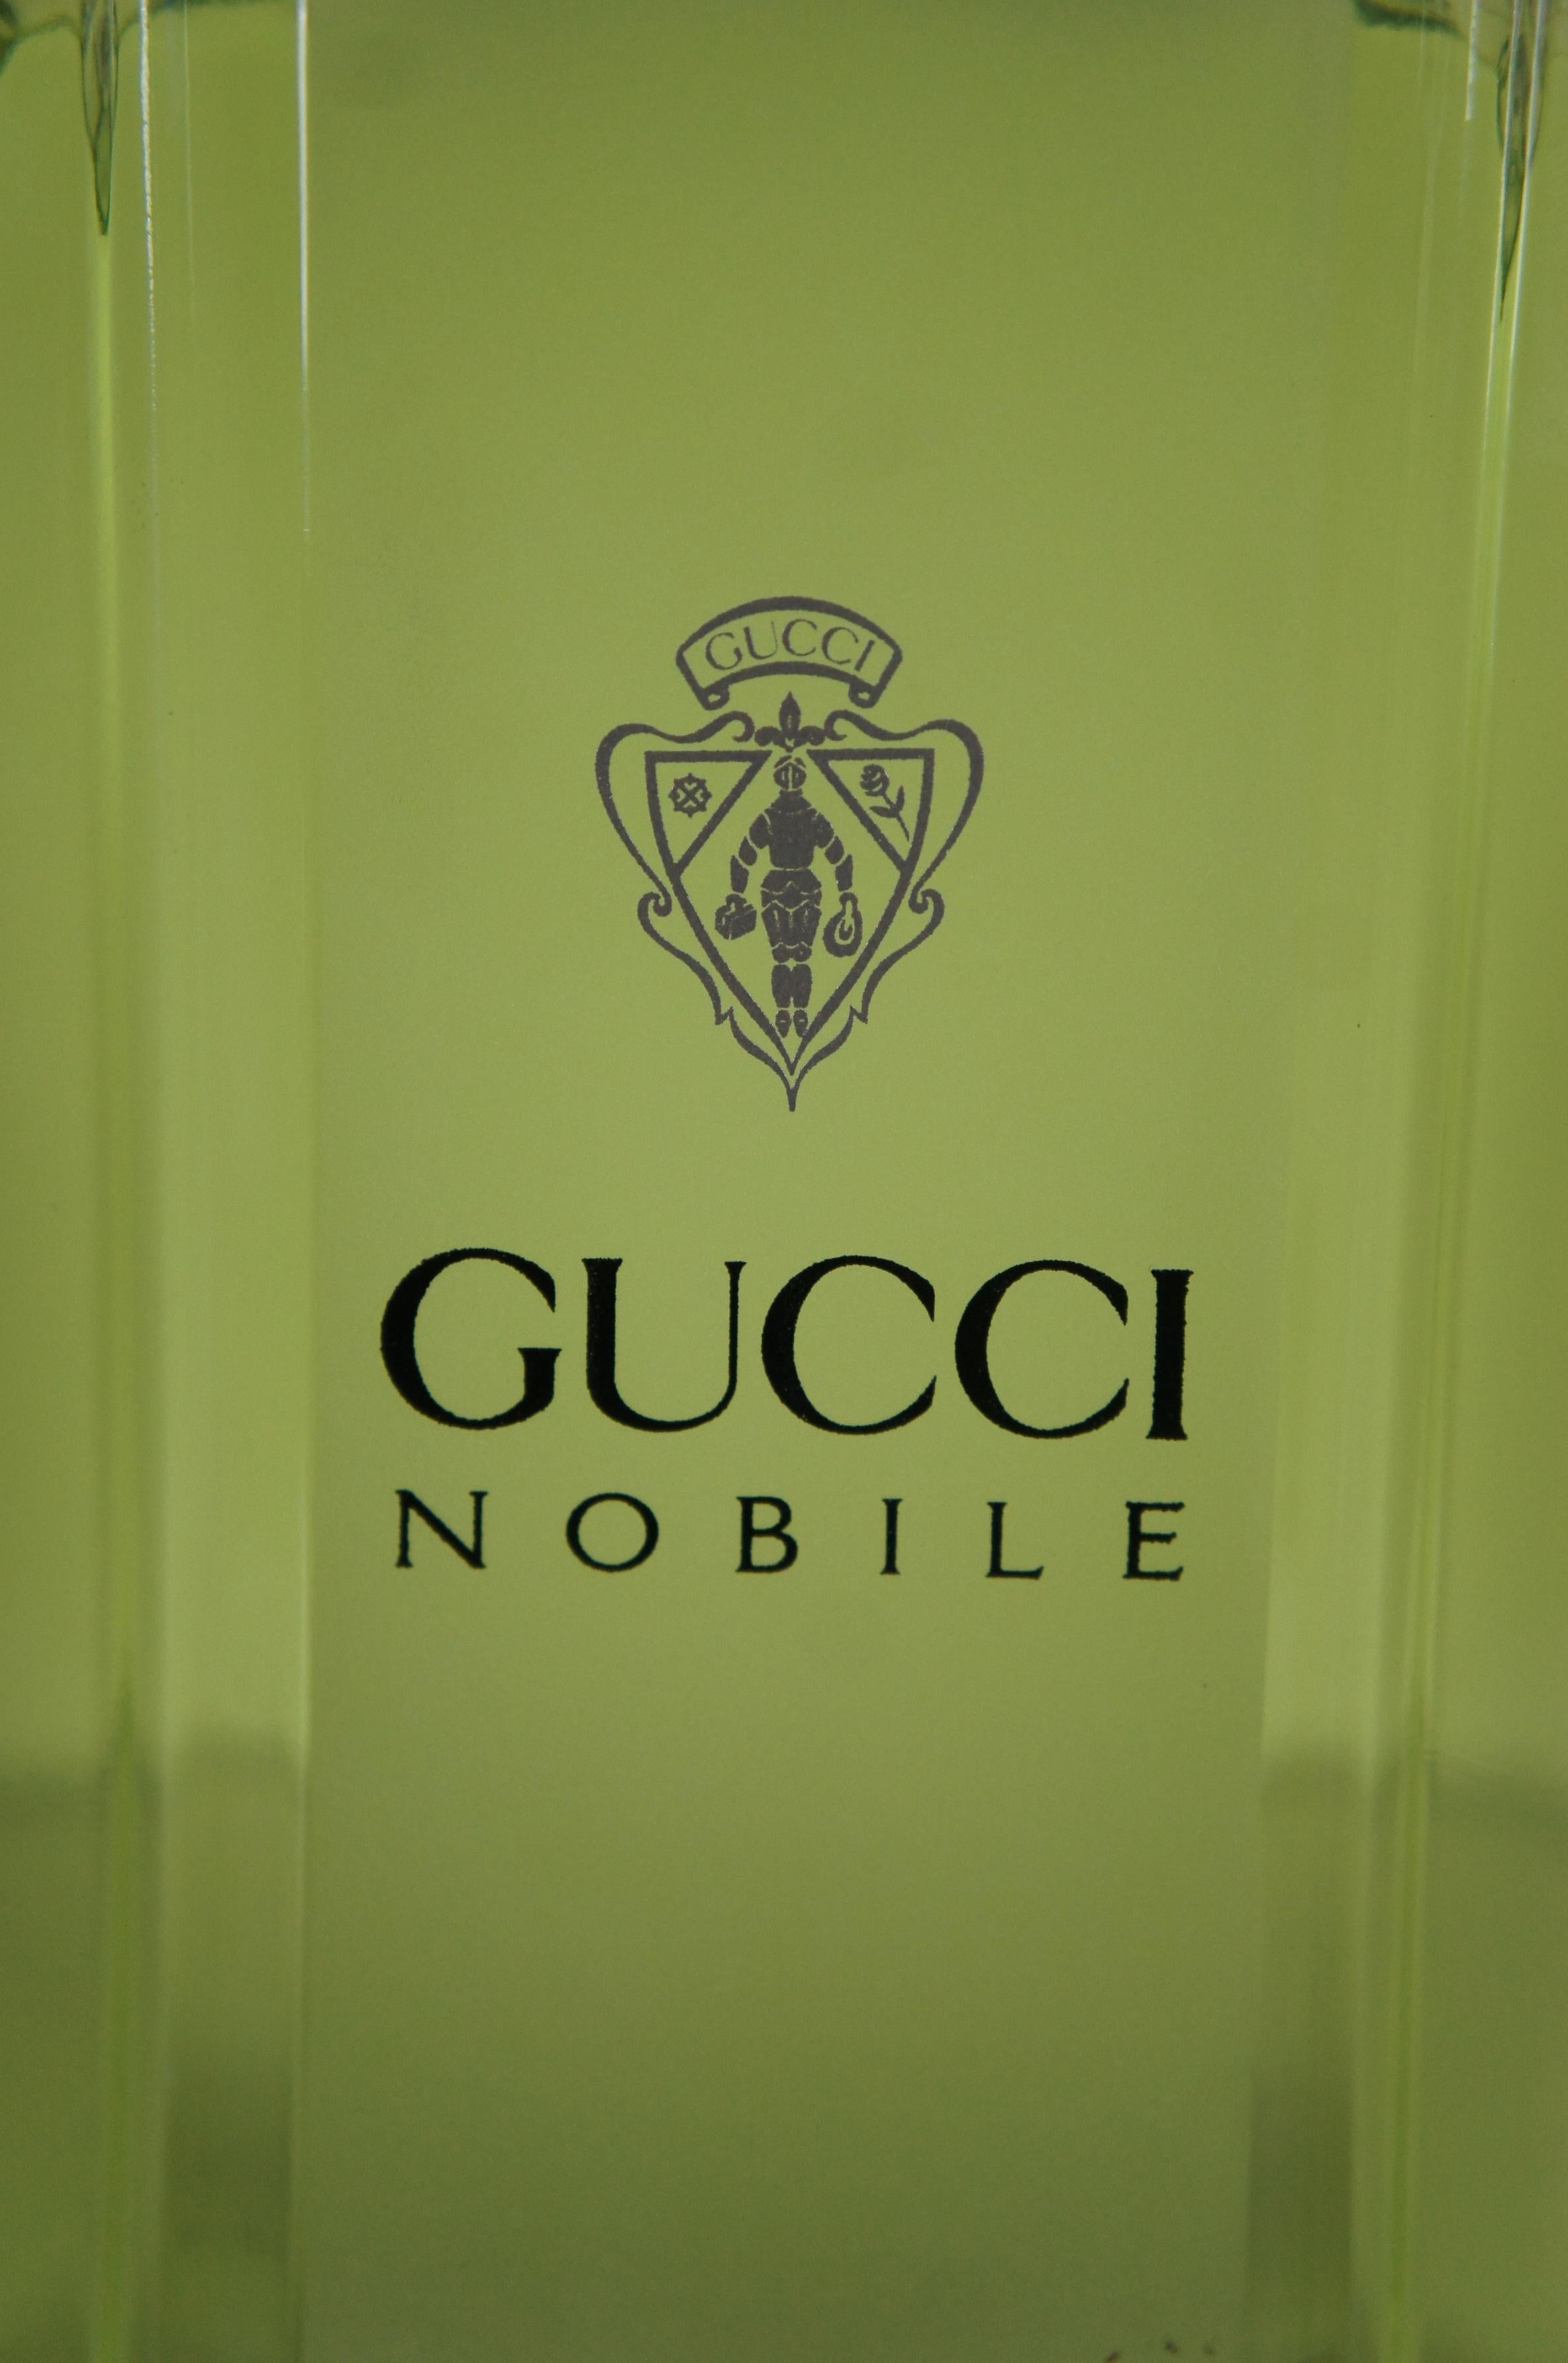 Gucci Nobile Eau Toilette Factice Dummy Cologne Perfume Bottle Store Display For Sale 3